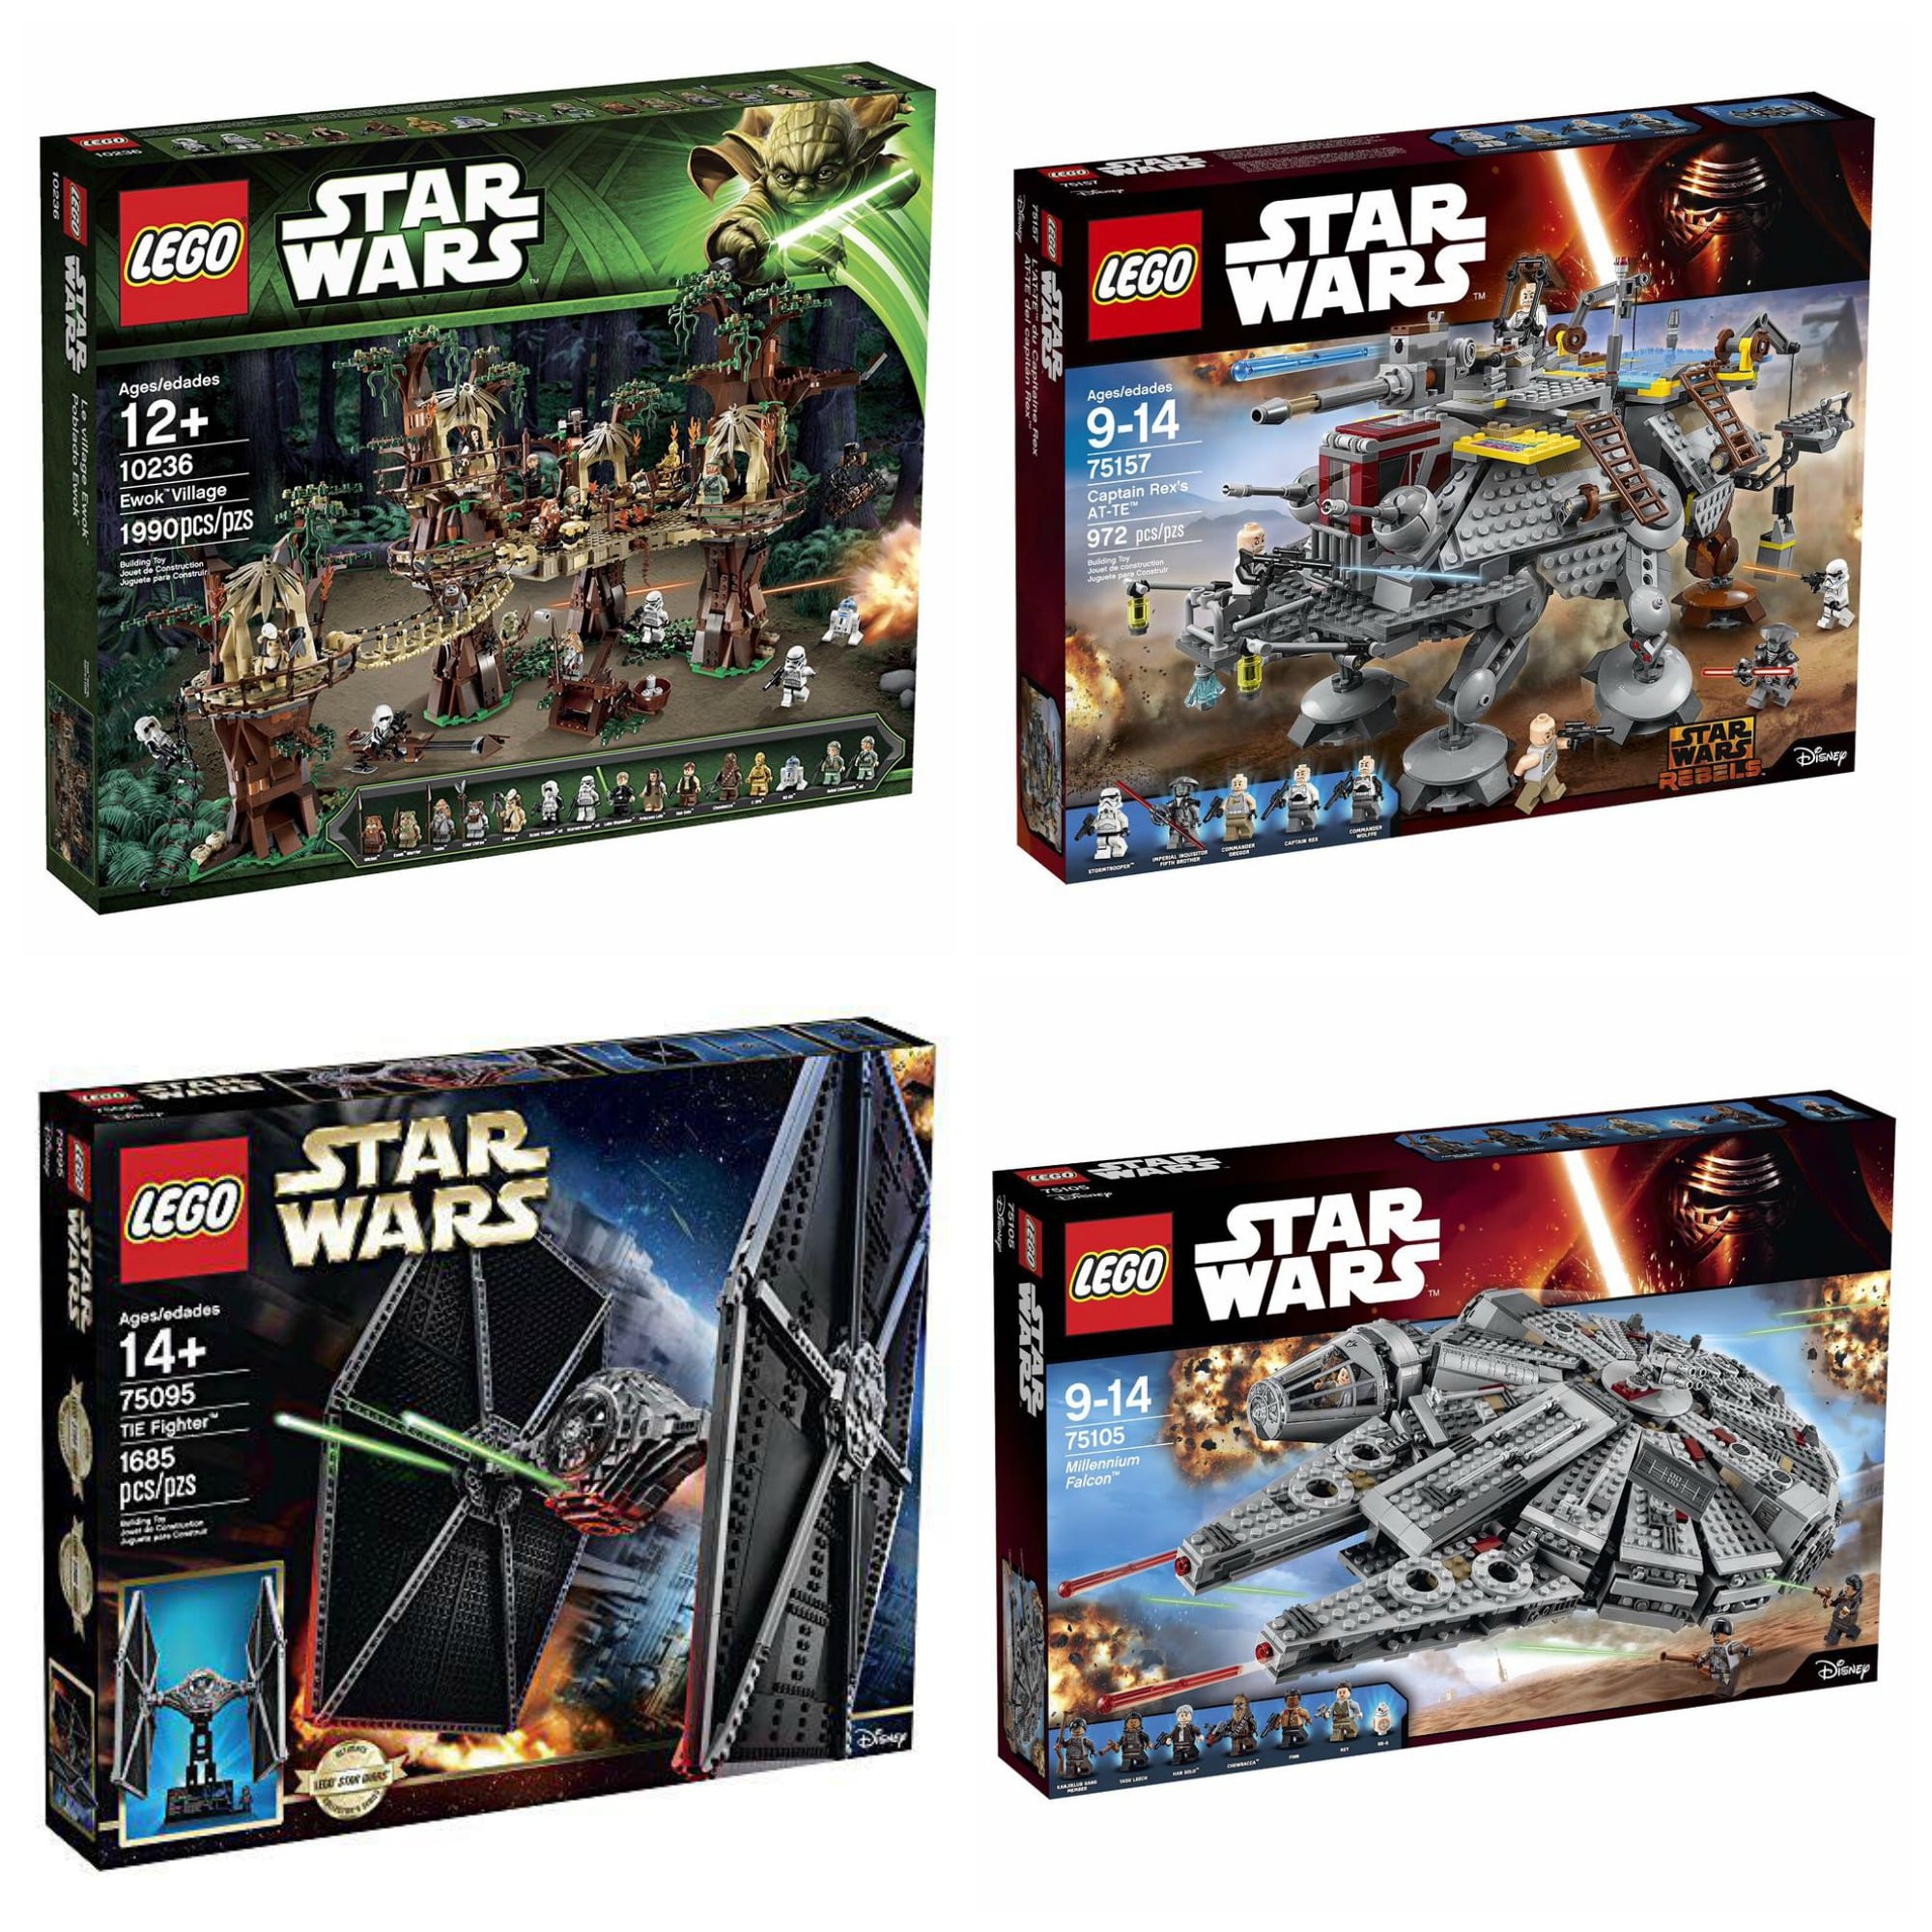 BIG Savings on LEGO Star Wars & LEGO Friends Sets on Amazon and Target.com!!